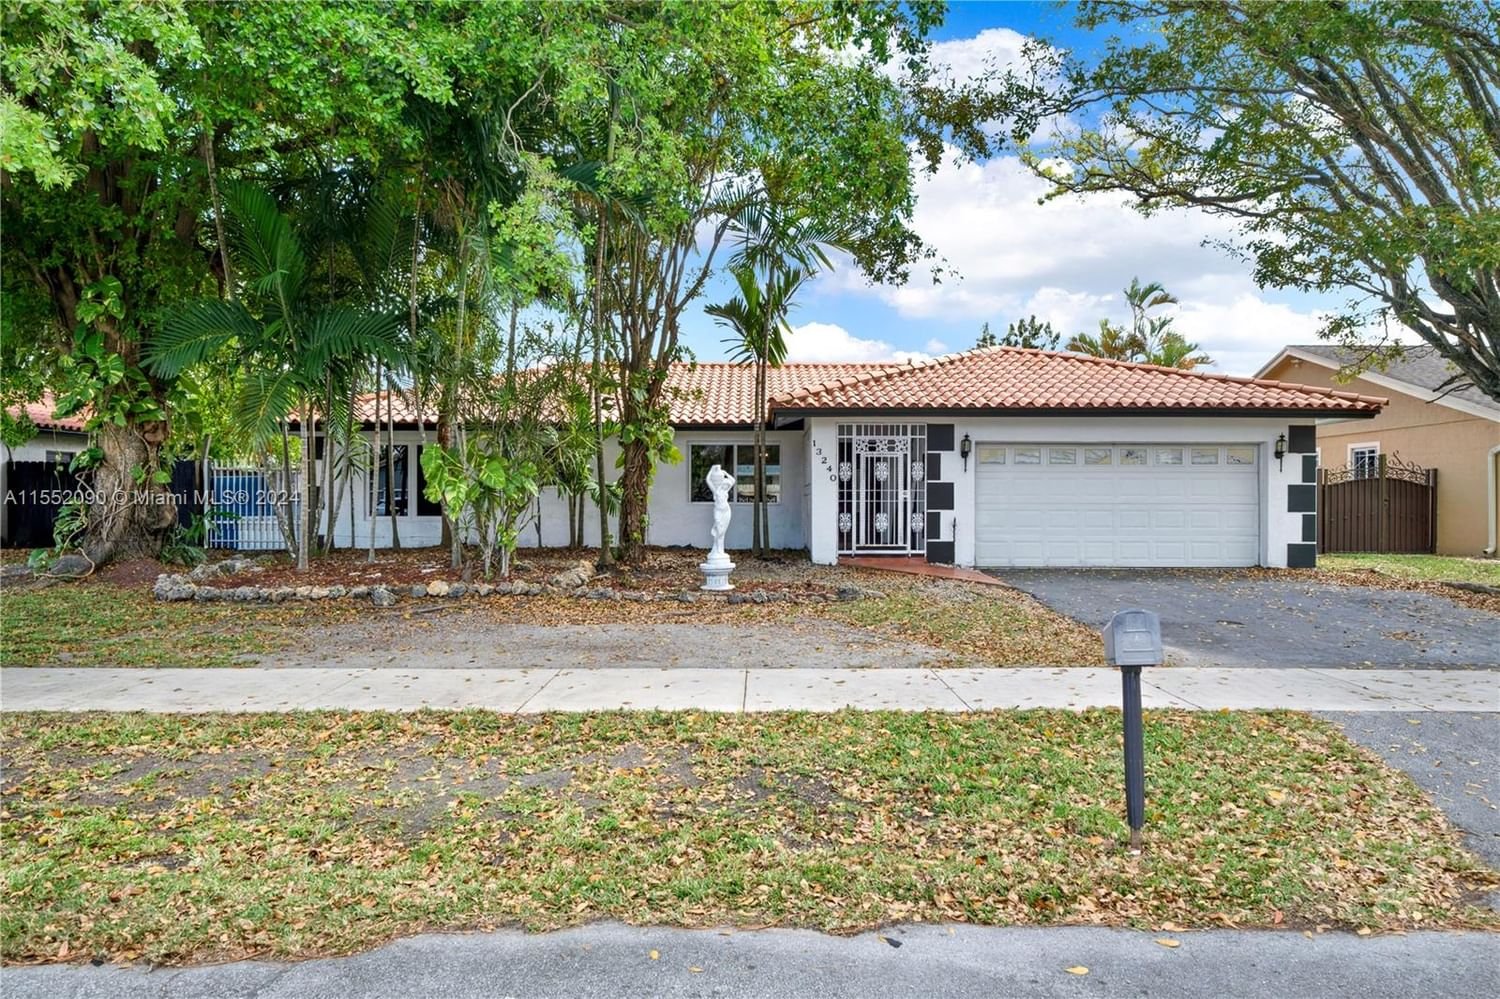 Real estate property located at 13240 43rd St, Miami-Dade County, SAN SEBASTIAN UNIT NO 5, Miami, FL